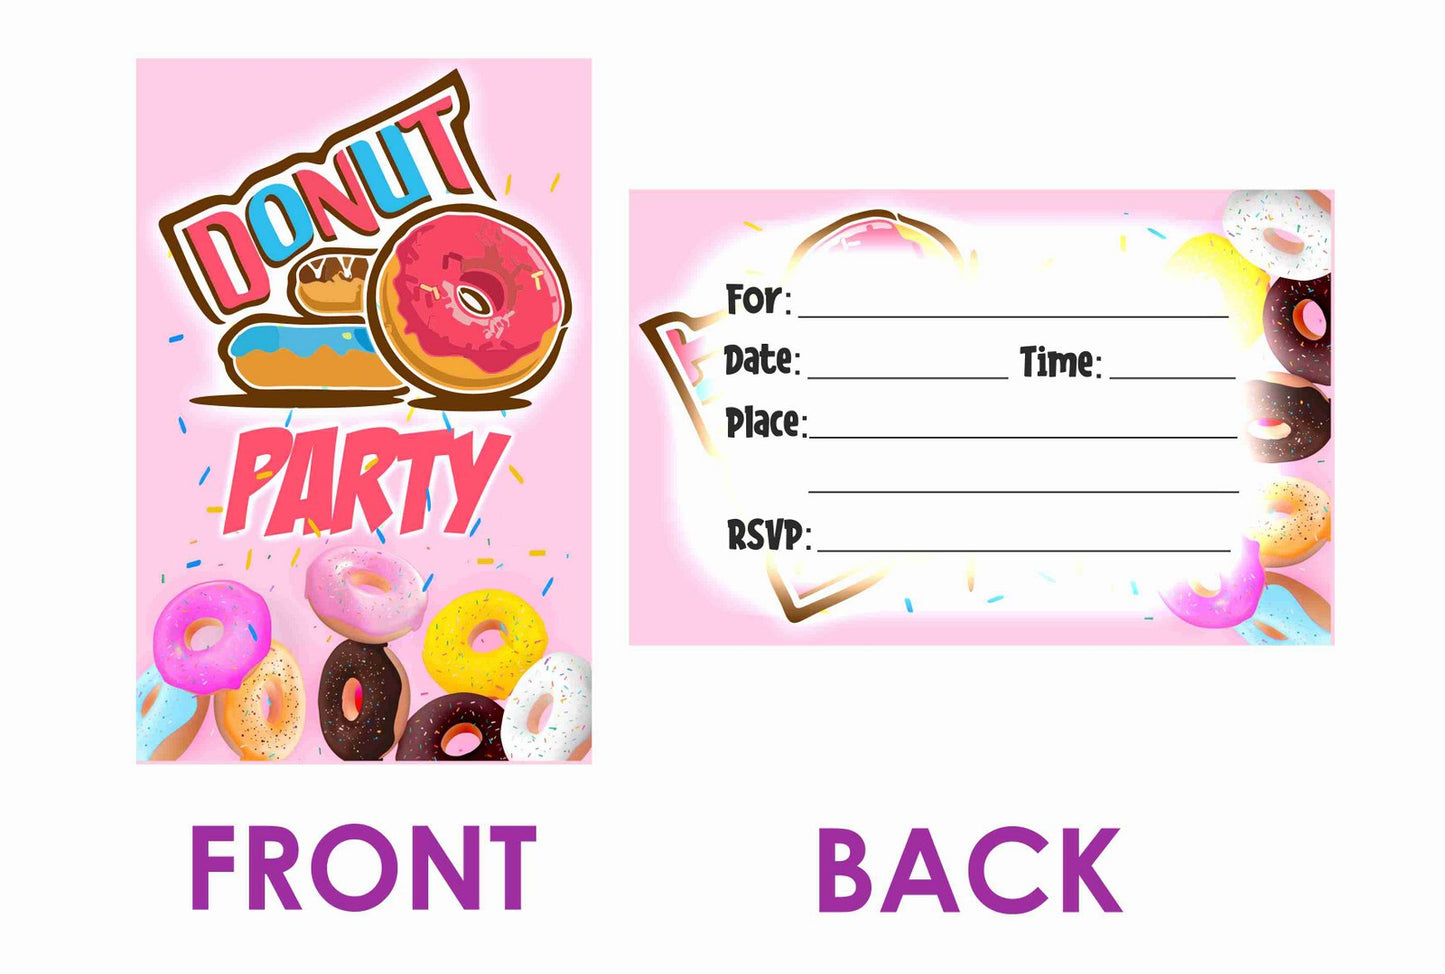 Donut Theme Children's Birthday Party Invitations Cards with Envelopes - Kids Birthday Party Invitations for Boys or Girls,- Invitation Cards (Pack of 10)